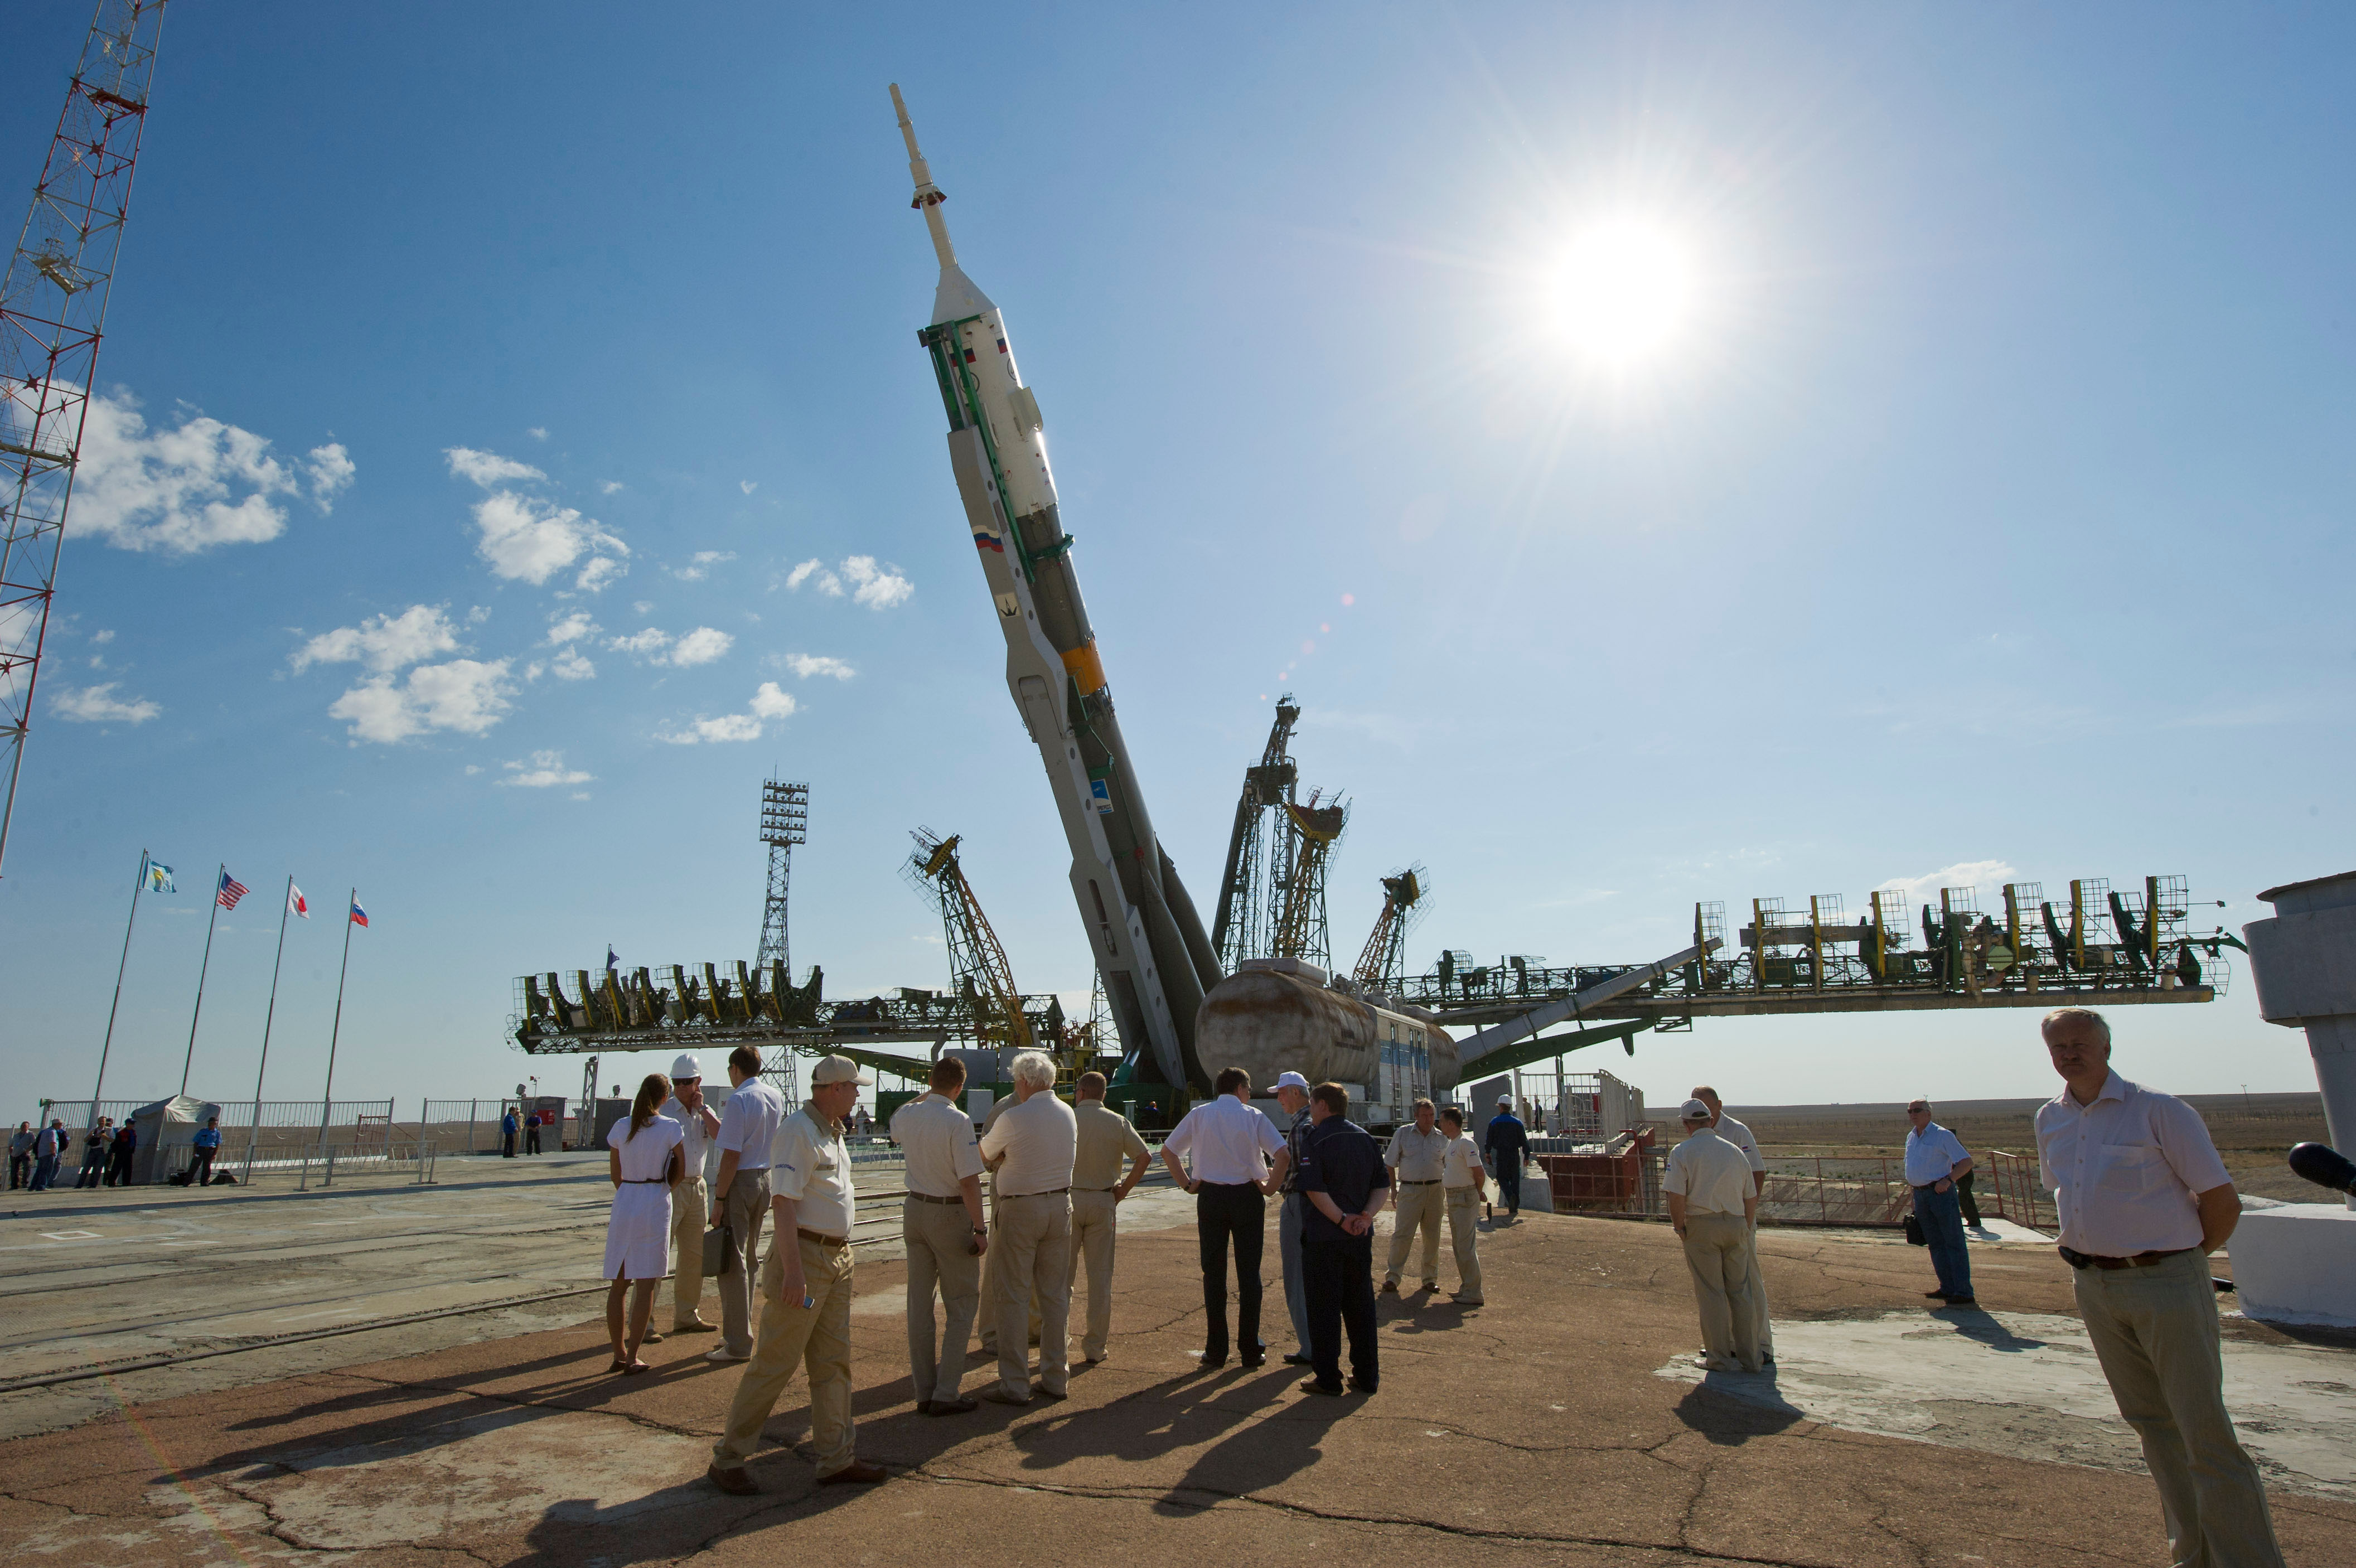 Soyuz TMA-02M spacecraft is raised into vertical position